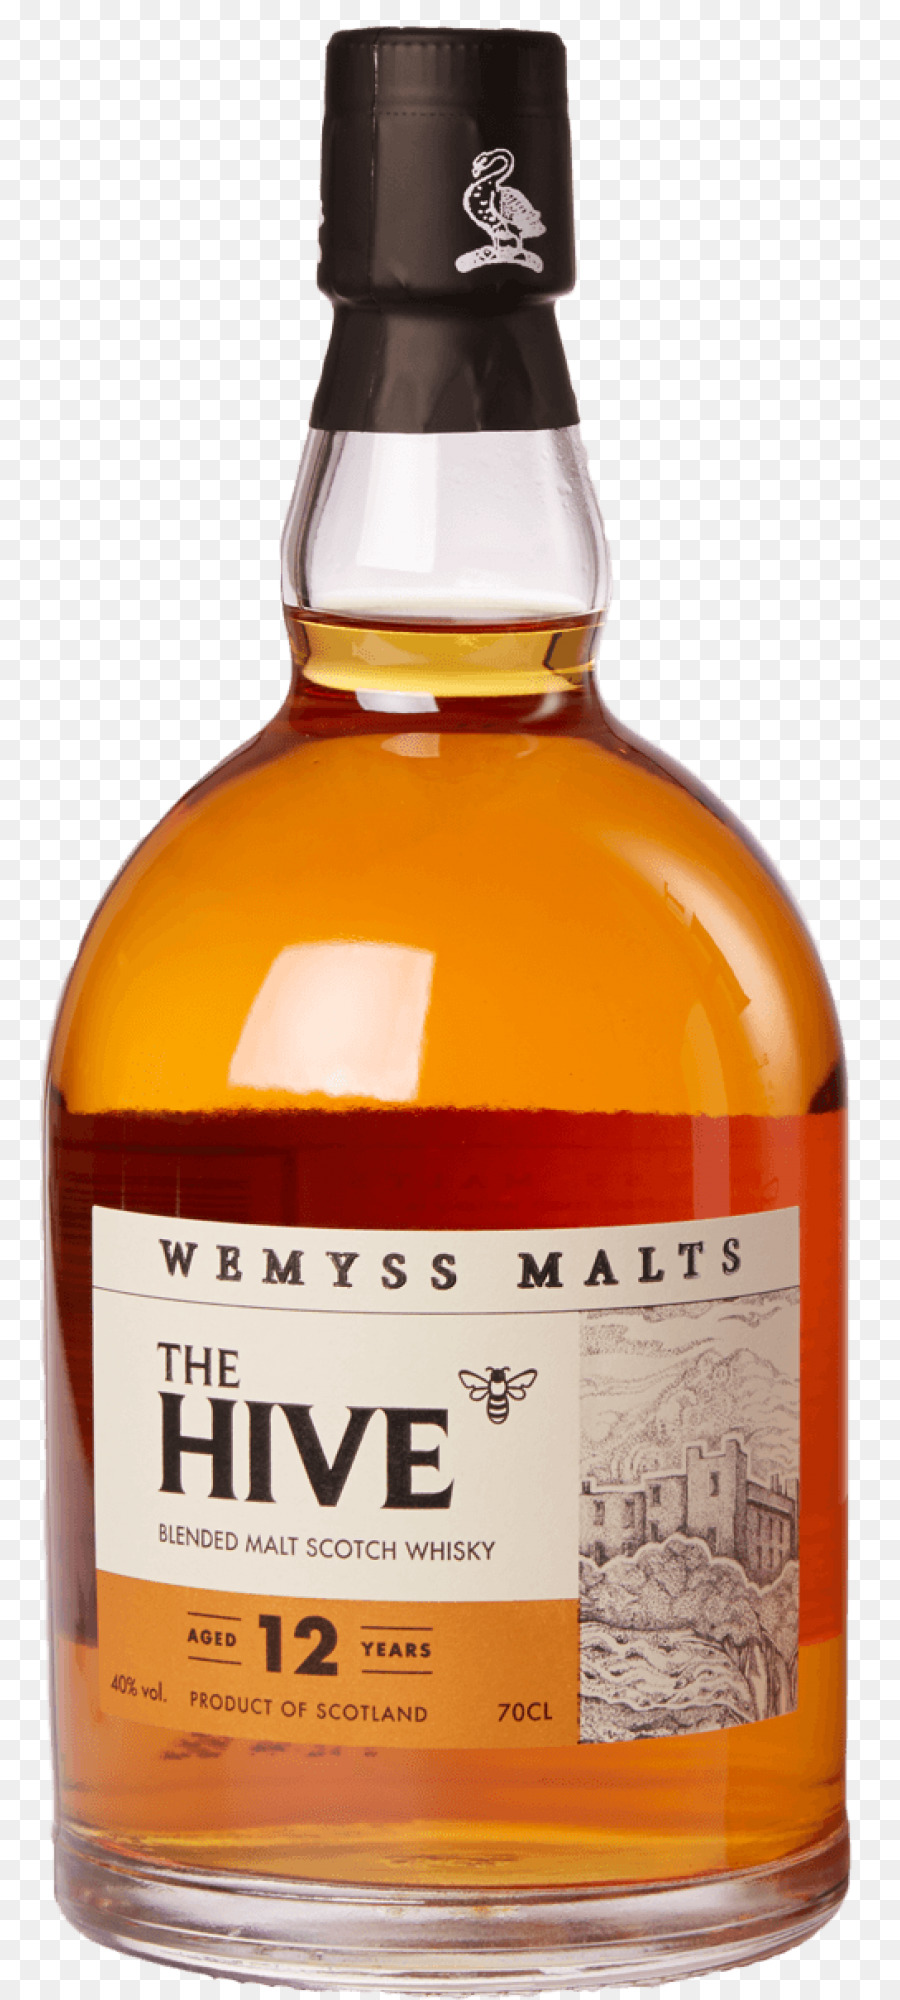 Tennessee whiskey Rượu Single malt Scotch whisky Single malt whisky - Rượu